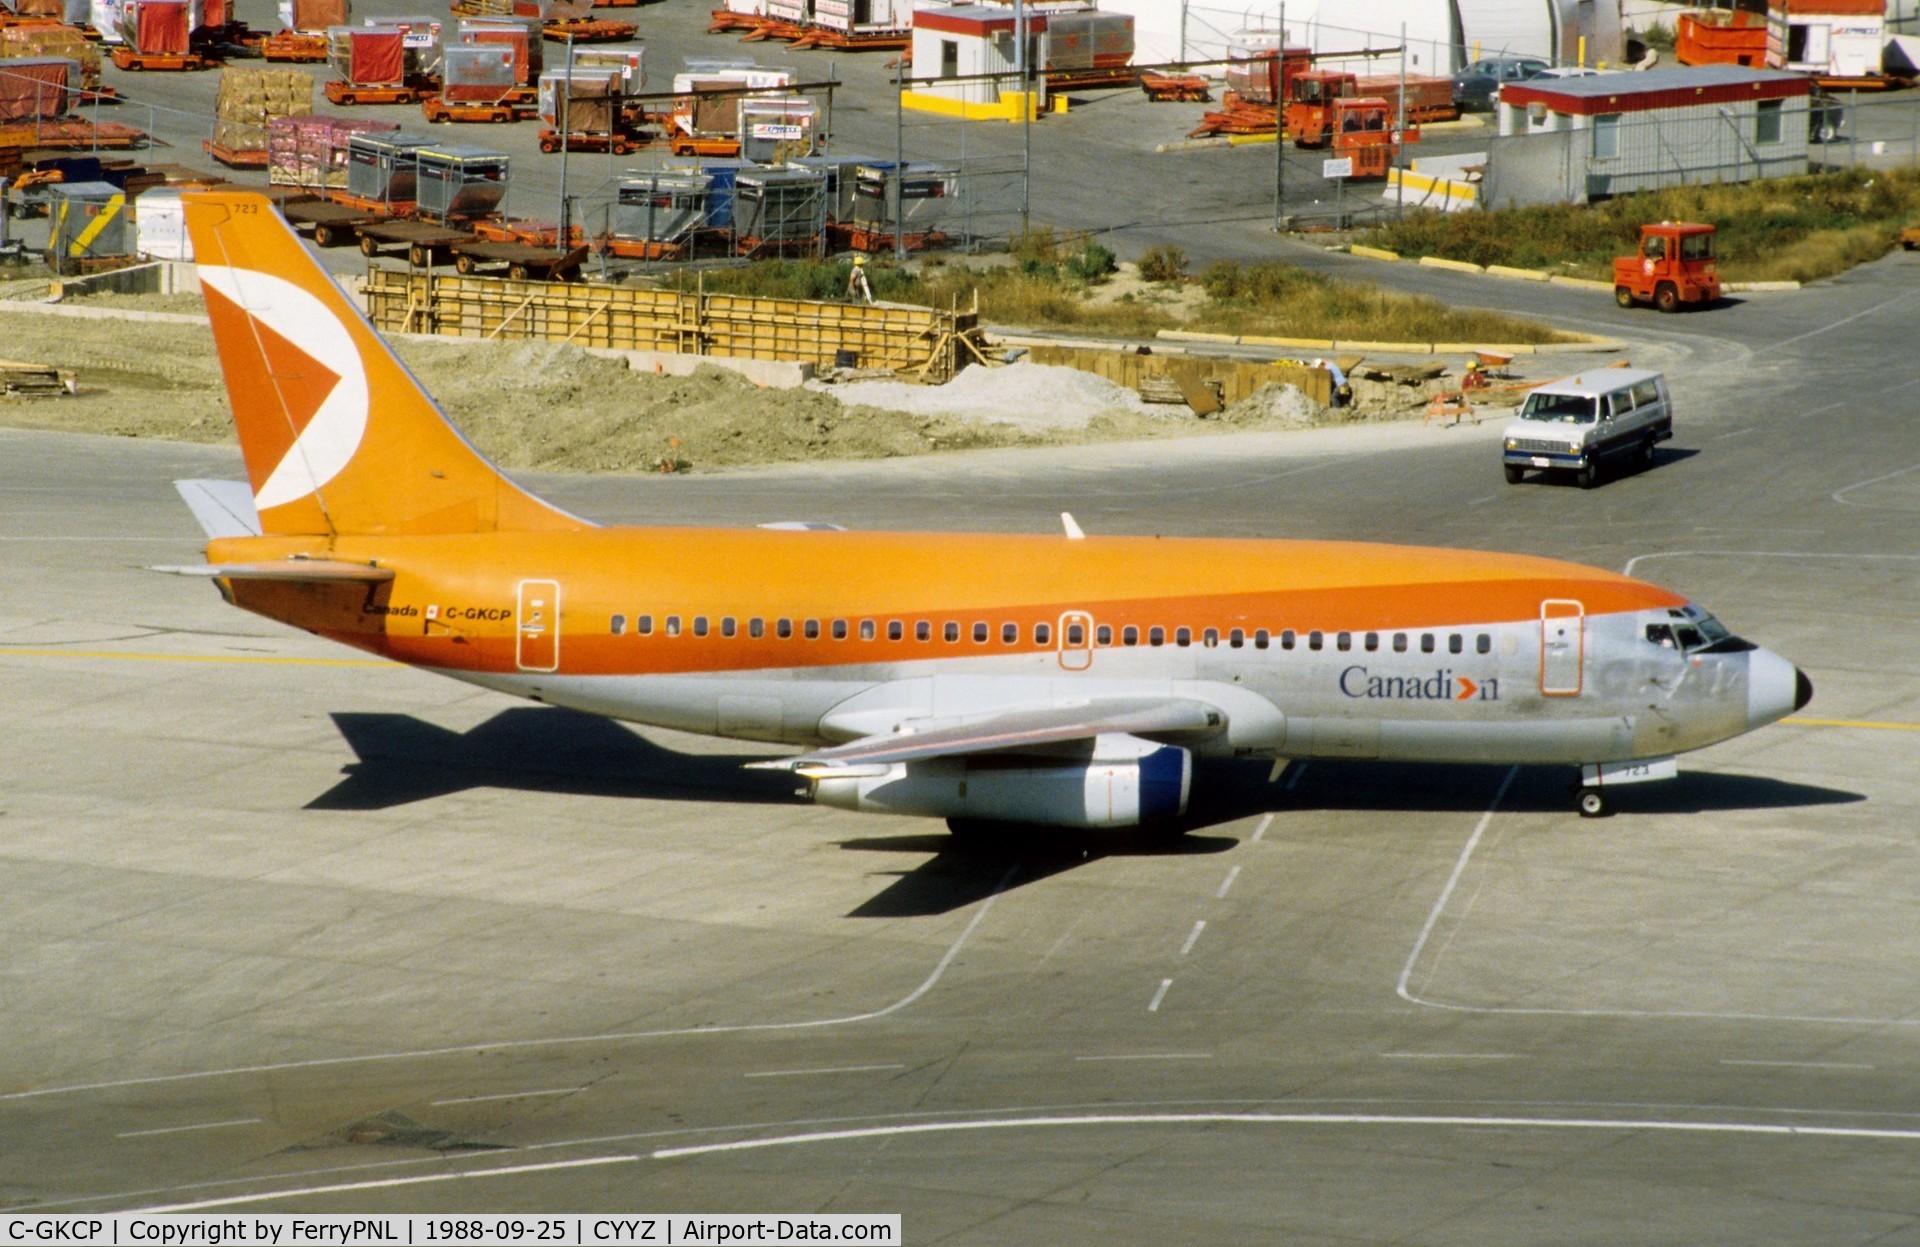 C-GKCP, 1982 Boeing 737-217 C/N 22729, Canadian B732